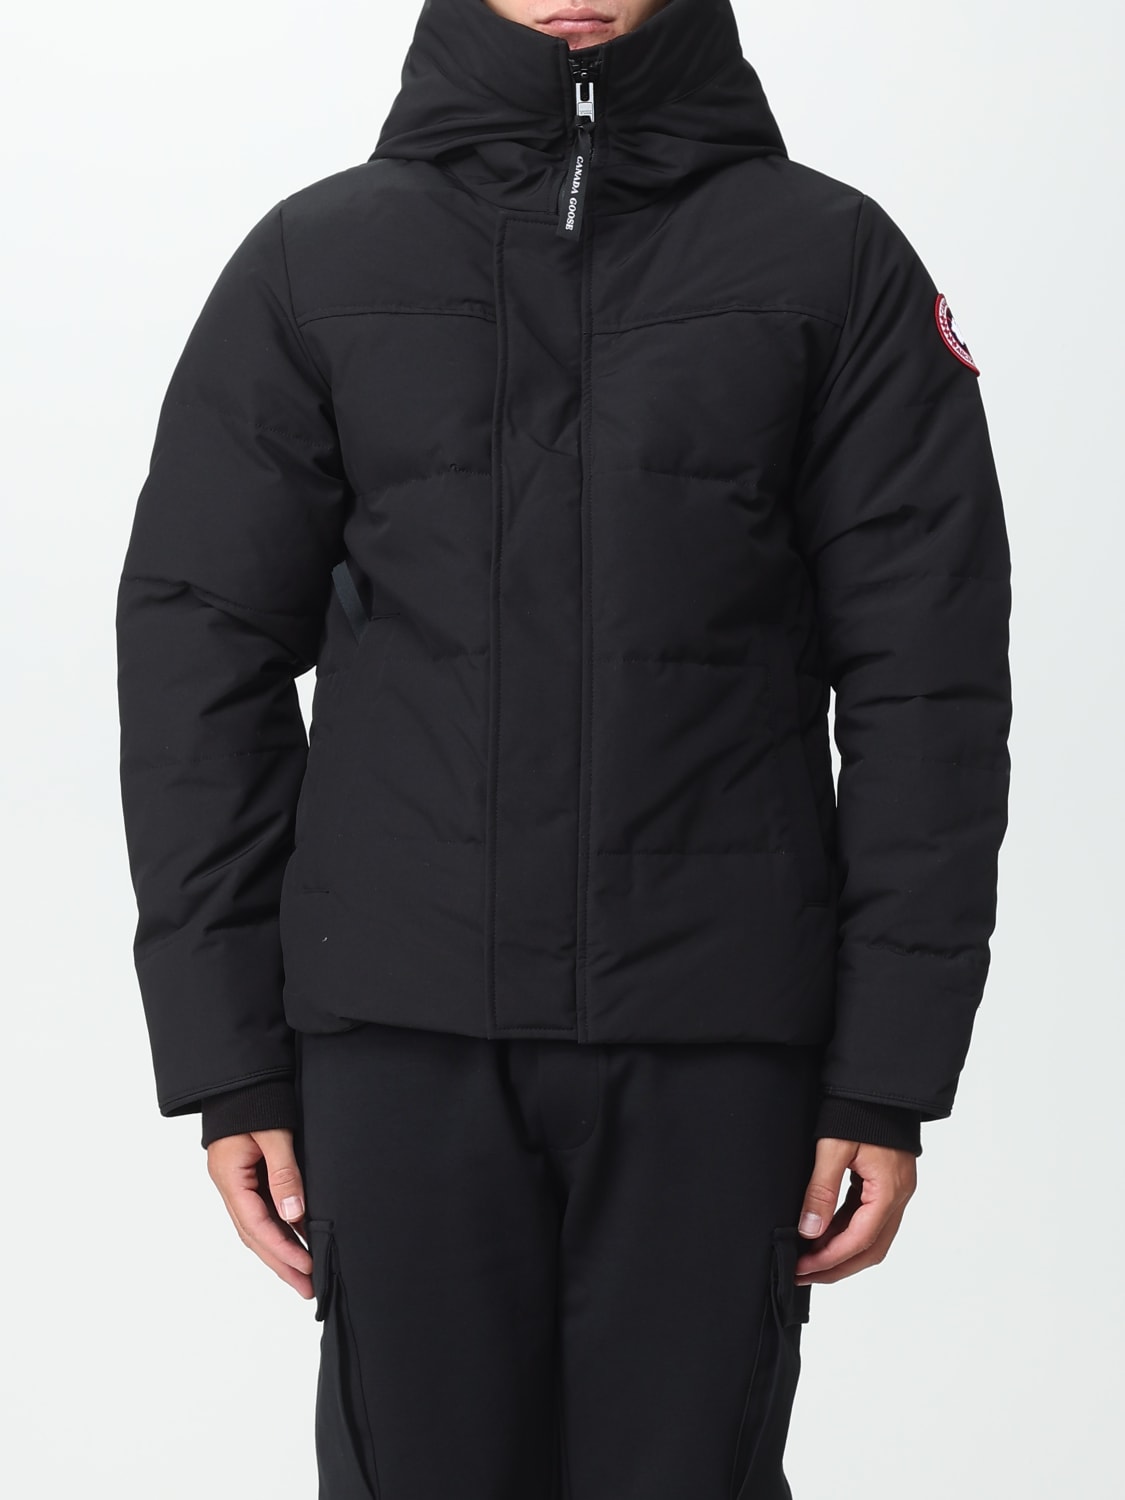 CANADA GOOSE: coat for man - Black | Canada Goose coat 2080M online at ...